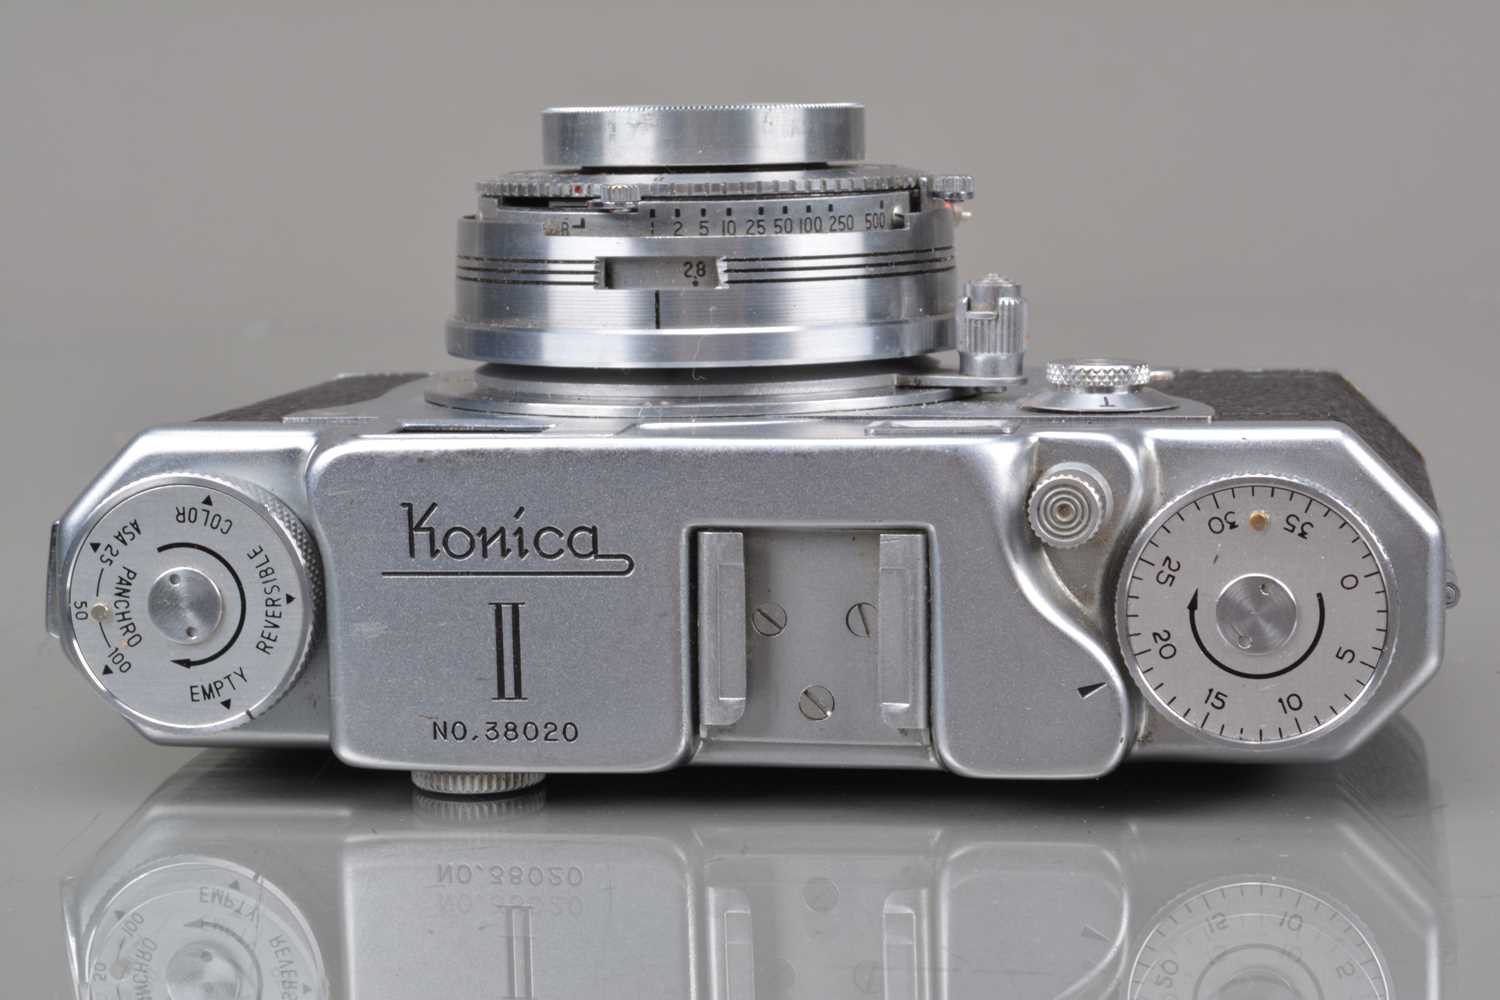 A Konica II Rangefinder Camera, - Image 3 of 3